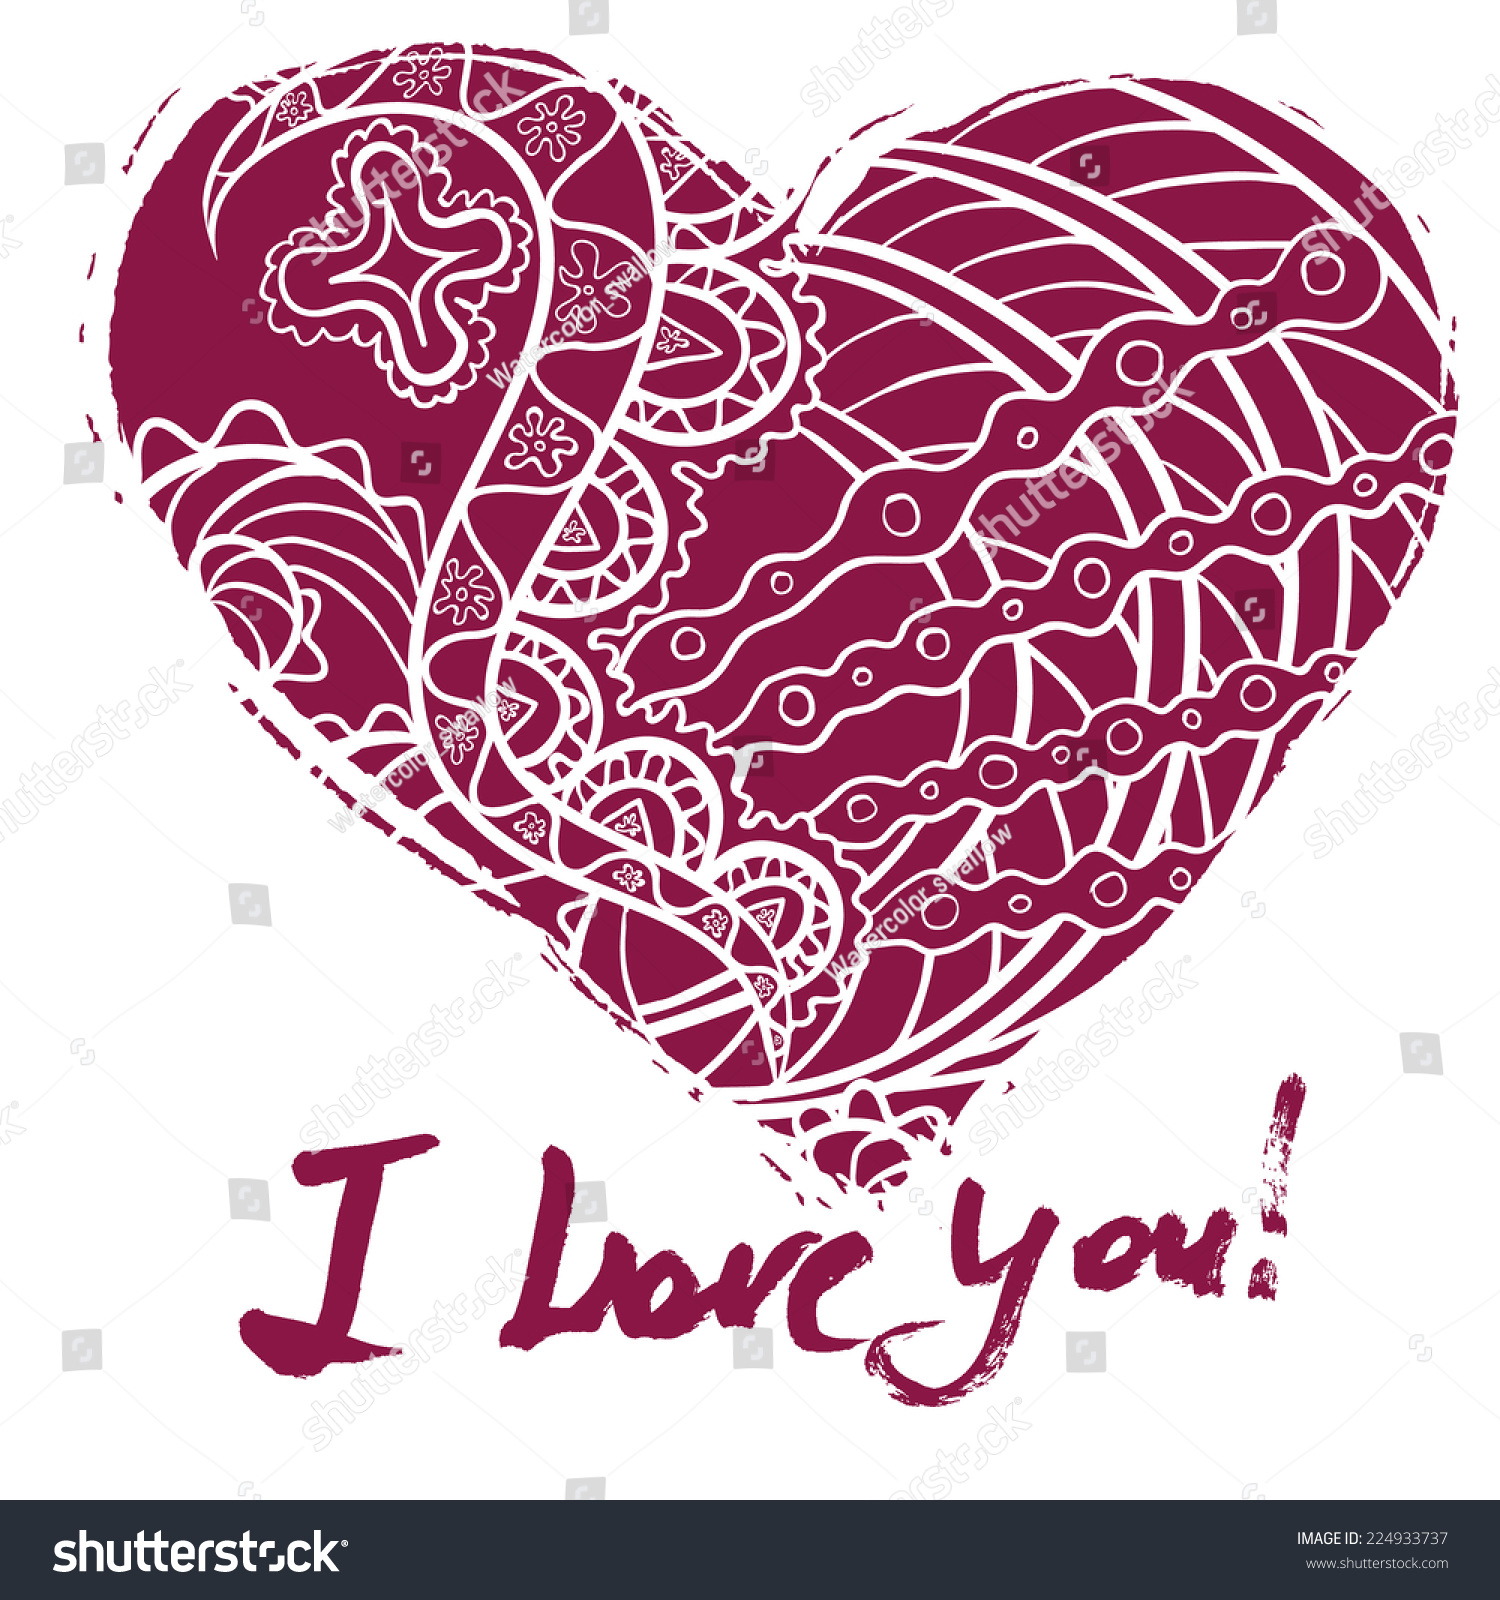 Grunge Valentine Card Hand Drawn Text Stock Vector 224933737 ...